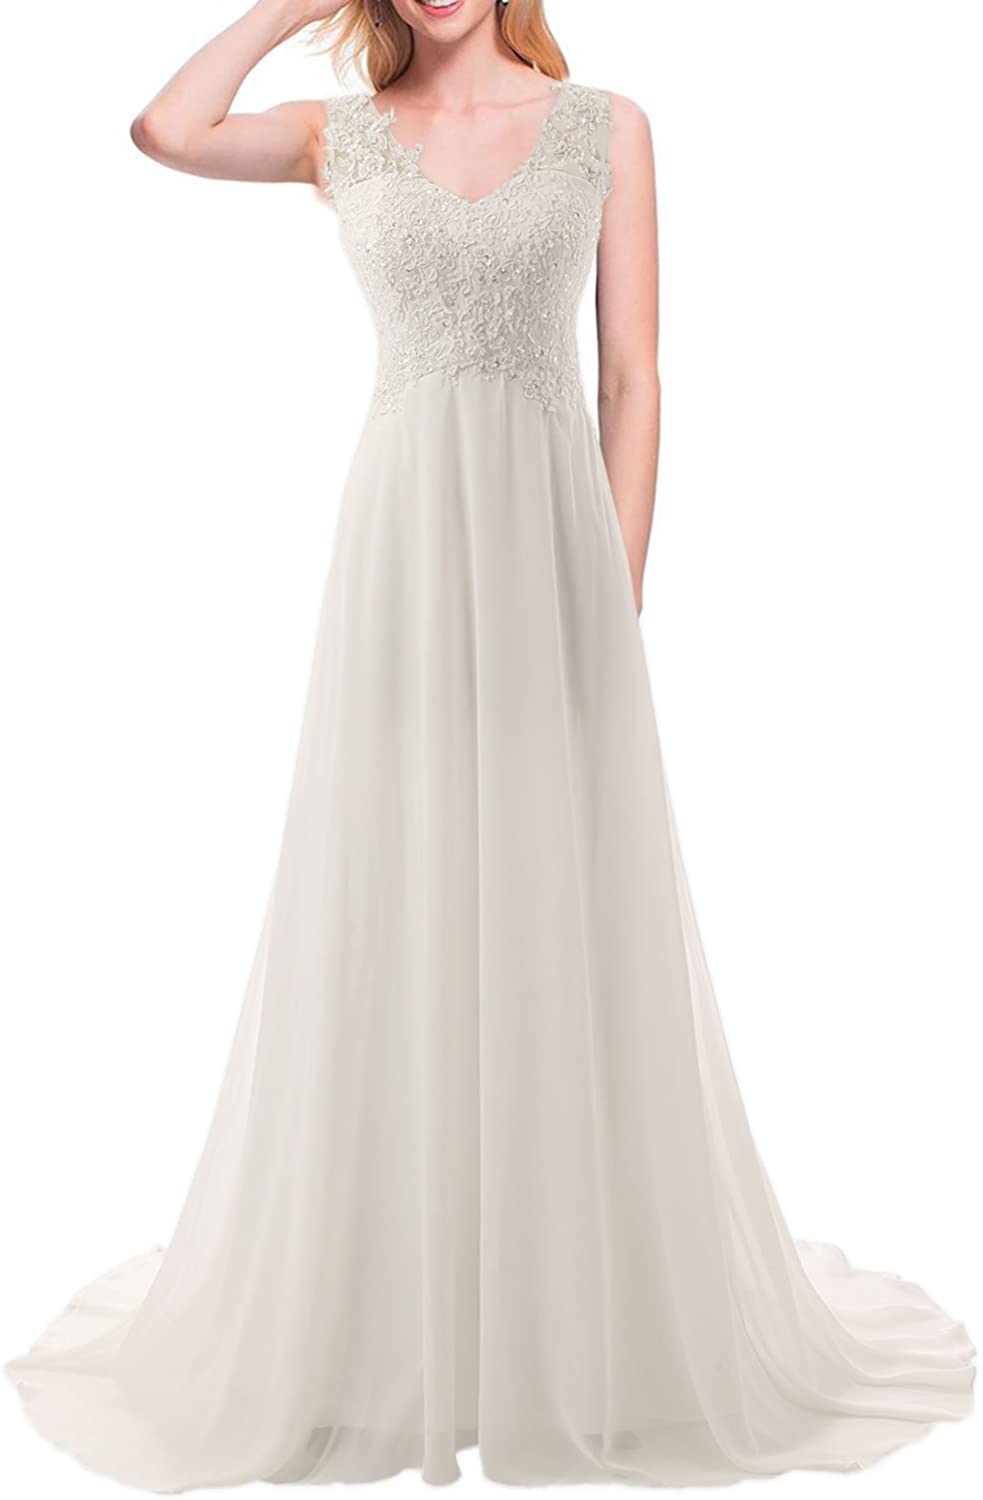 JAEDEN Wedding Dress for Bride Beach Bridal Dresses Lace Wedding Gown A Line  Bri | eBay